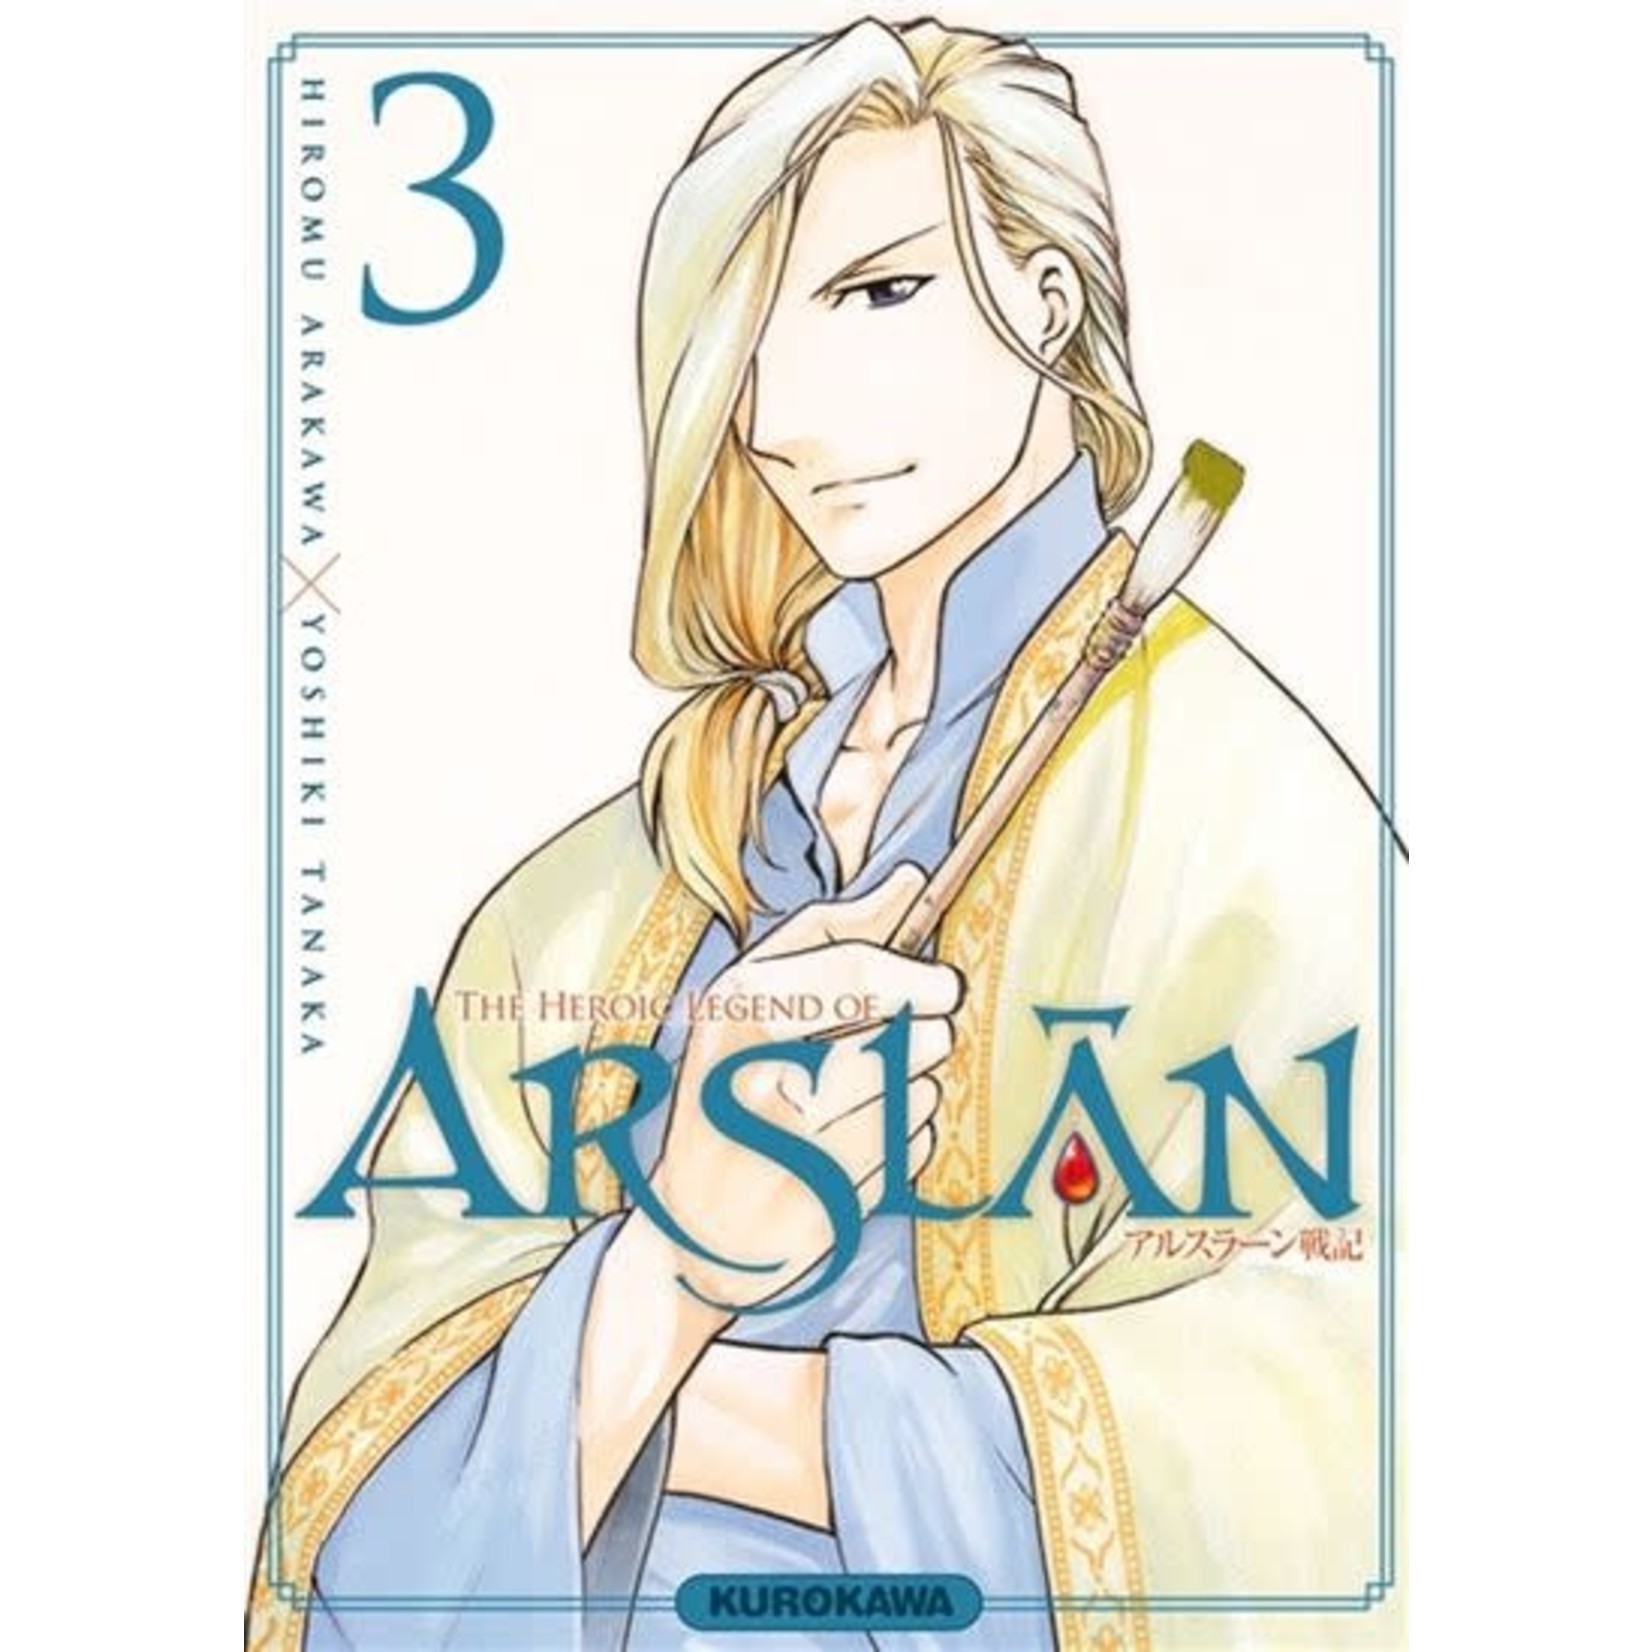 0-Kurokawa Heroic Legend of Arslan (The)